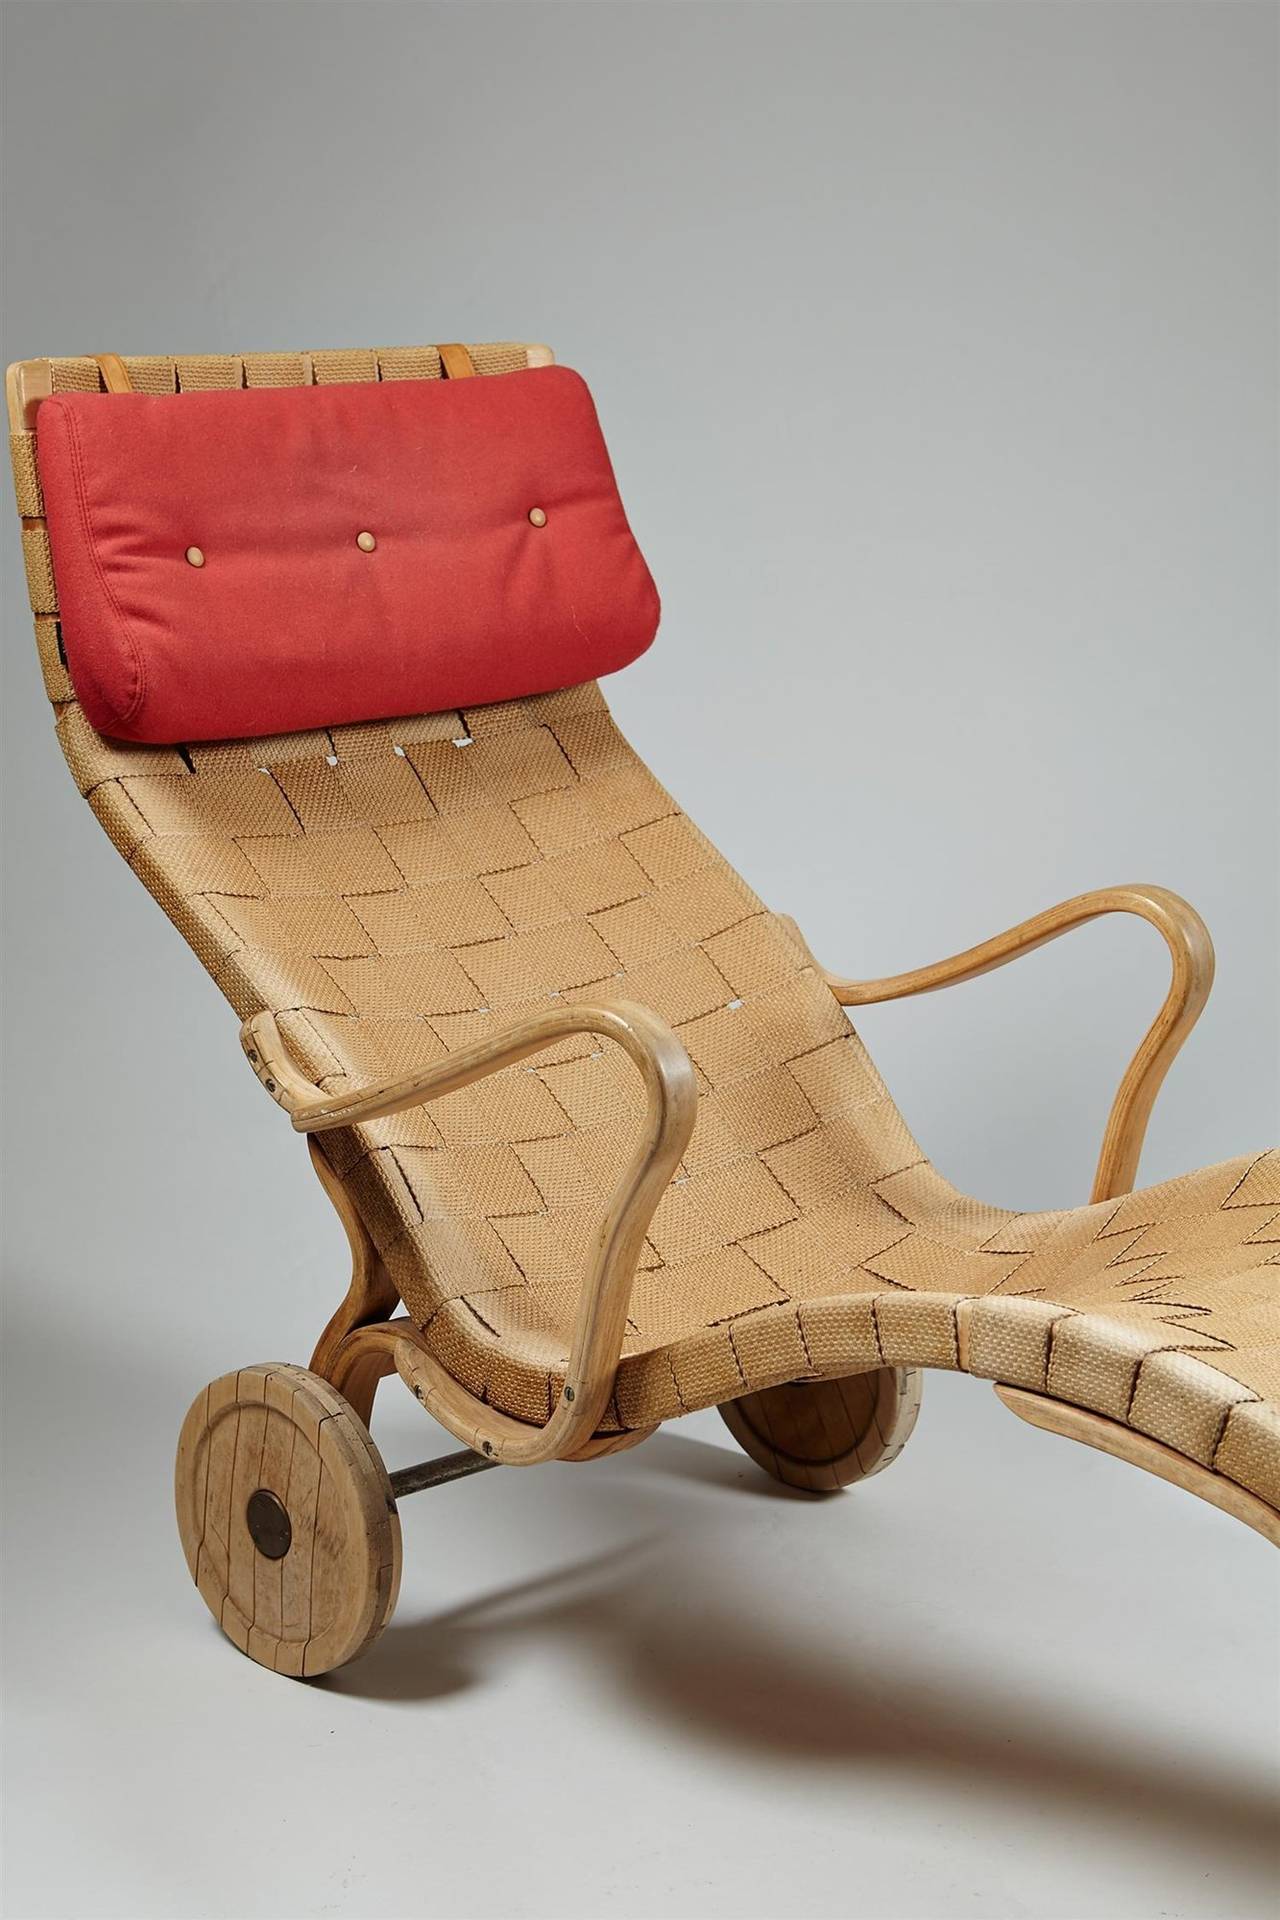 Scandinavian Modern Chaise Longue Designed by Bruno Mathsson for Karl Mathsson, Sweden, 1942